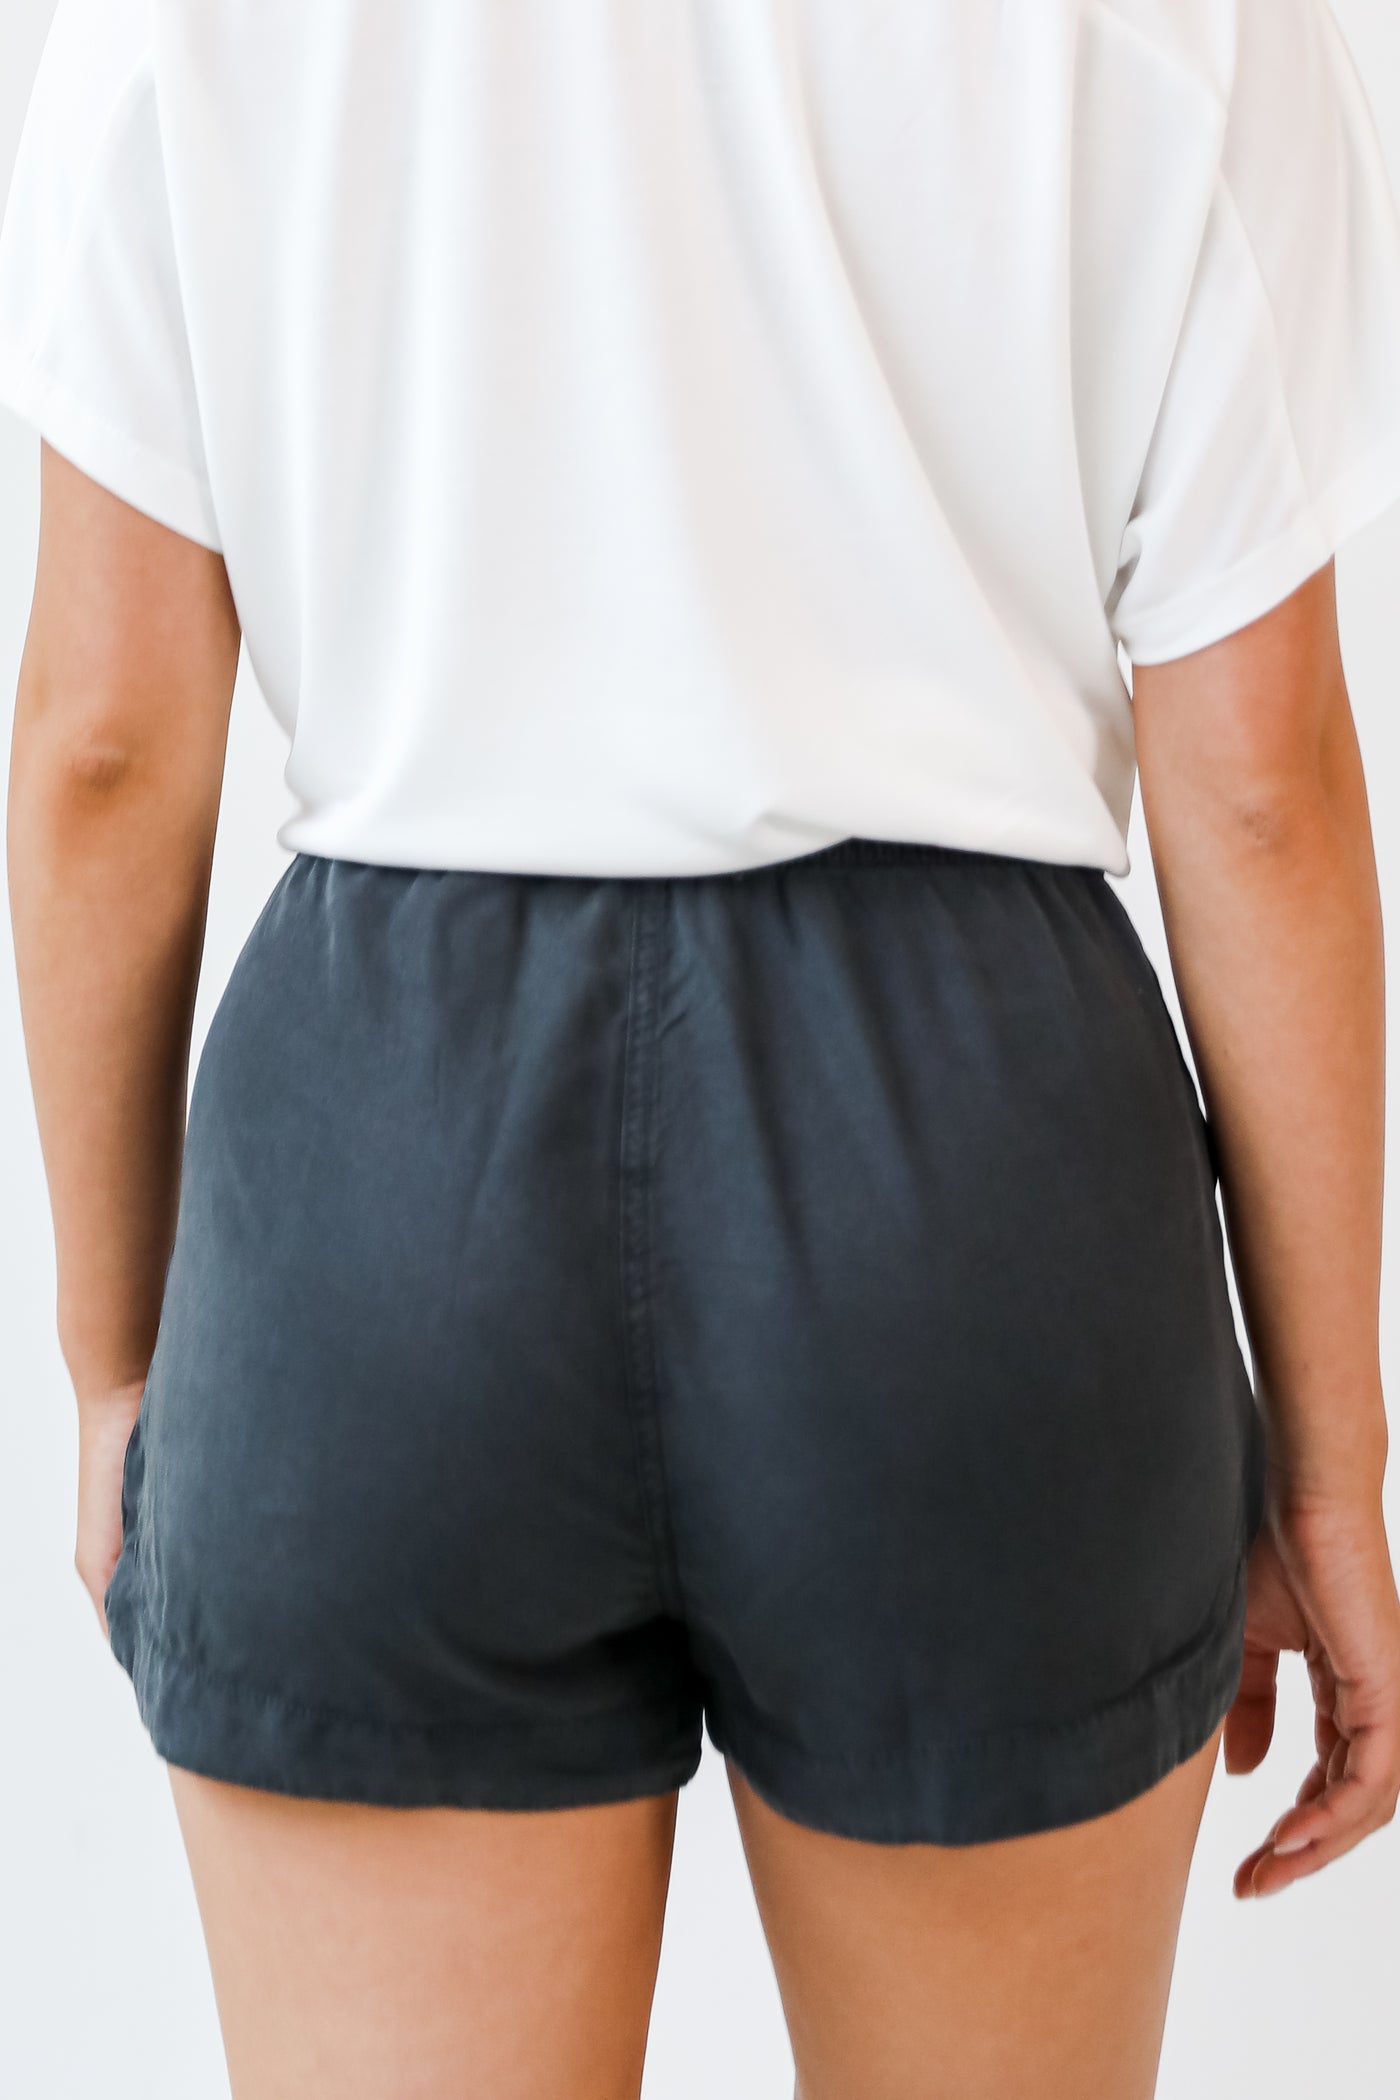 black Shorts back view